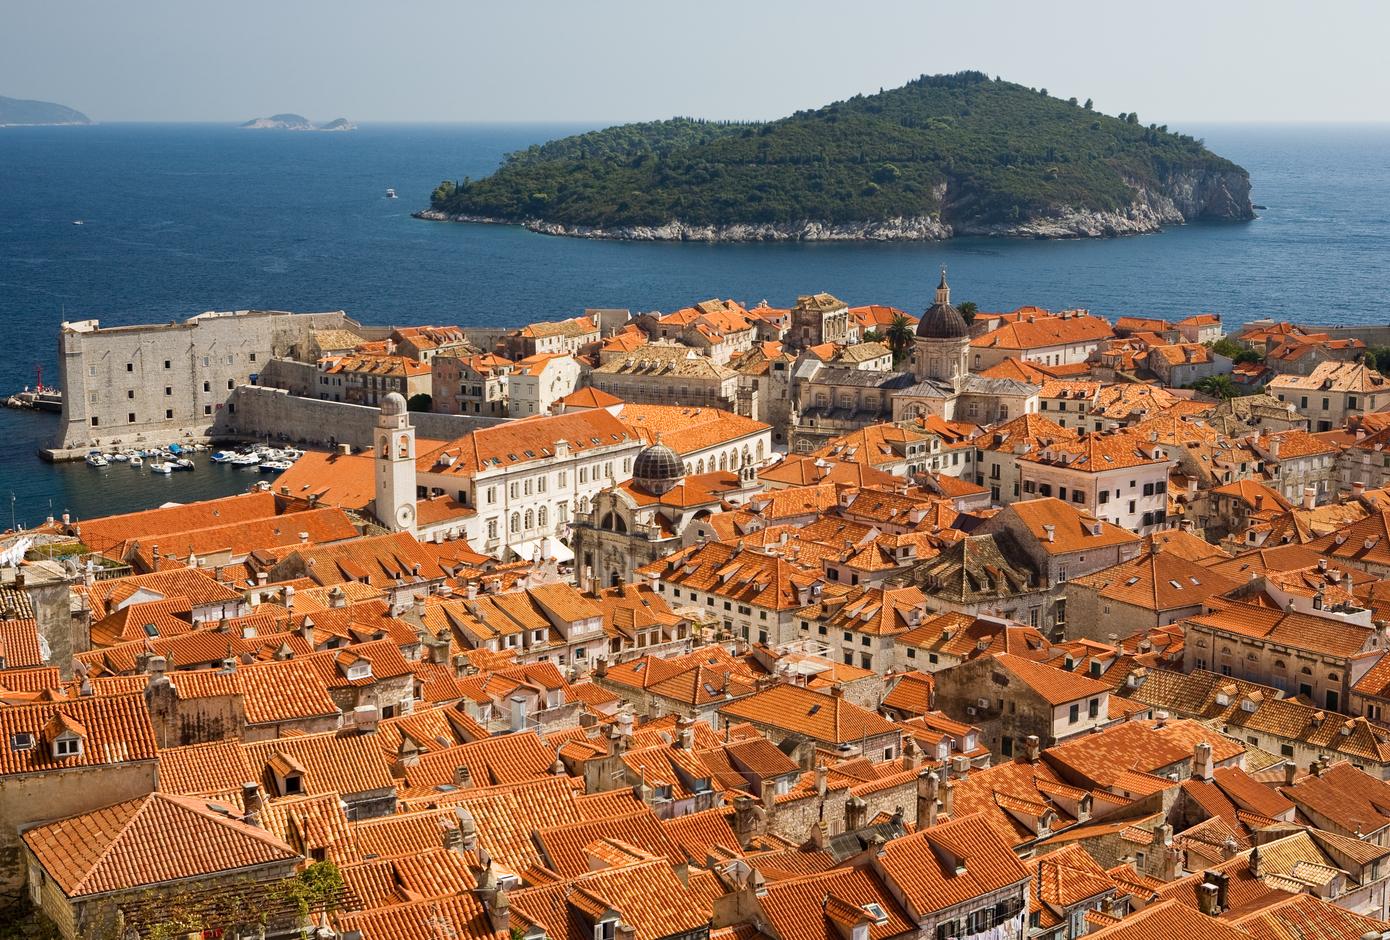 Old Town of Dubrovnik and Lokrum Island, in Croatia.
